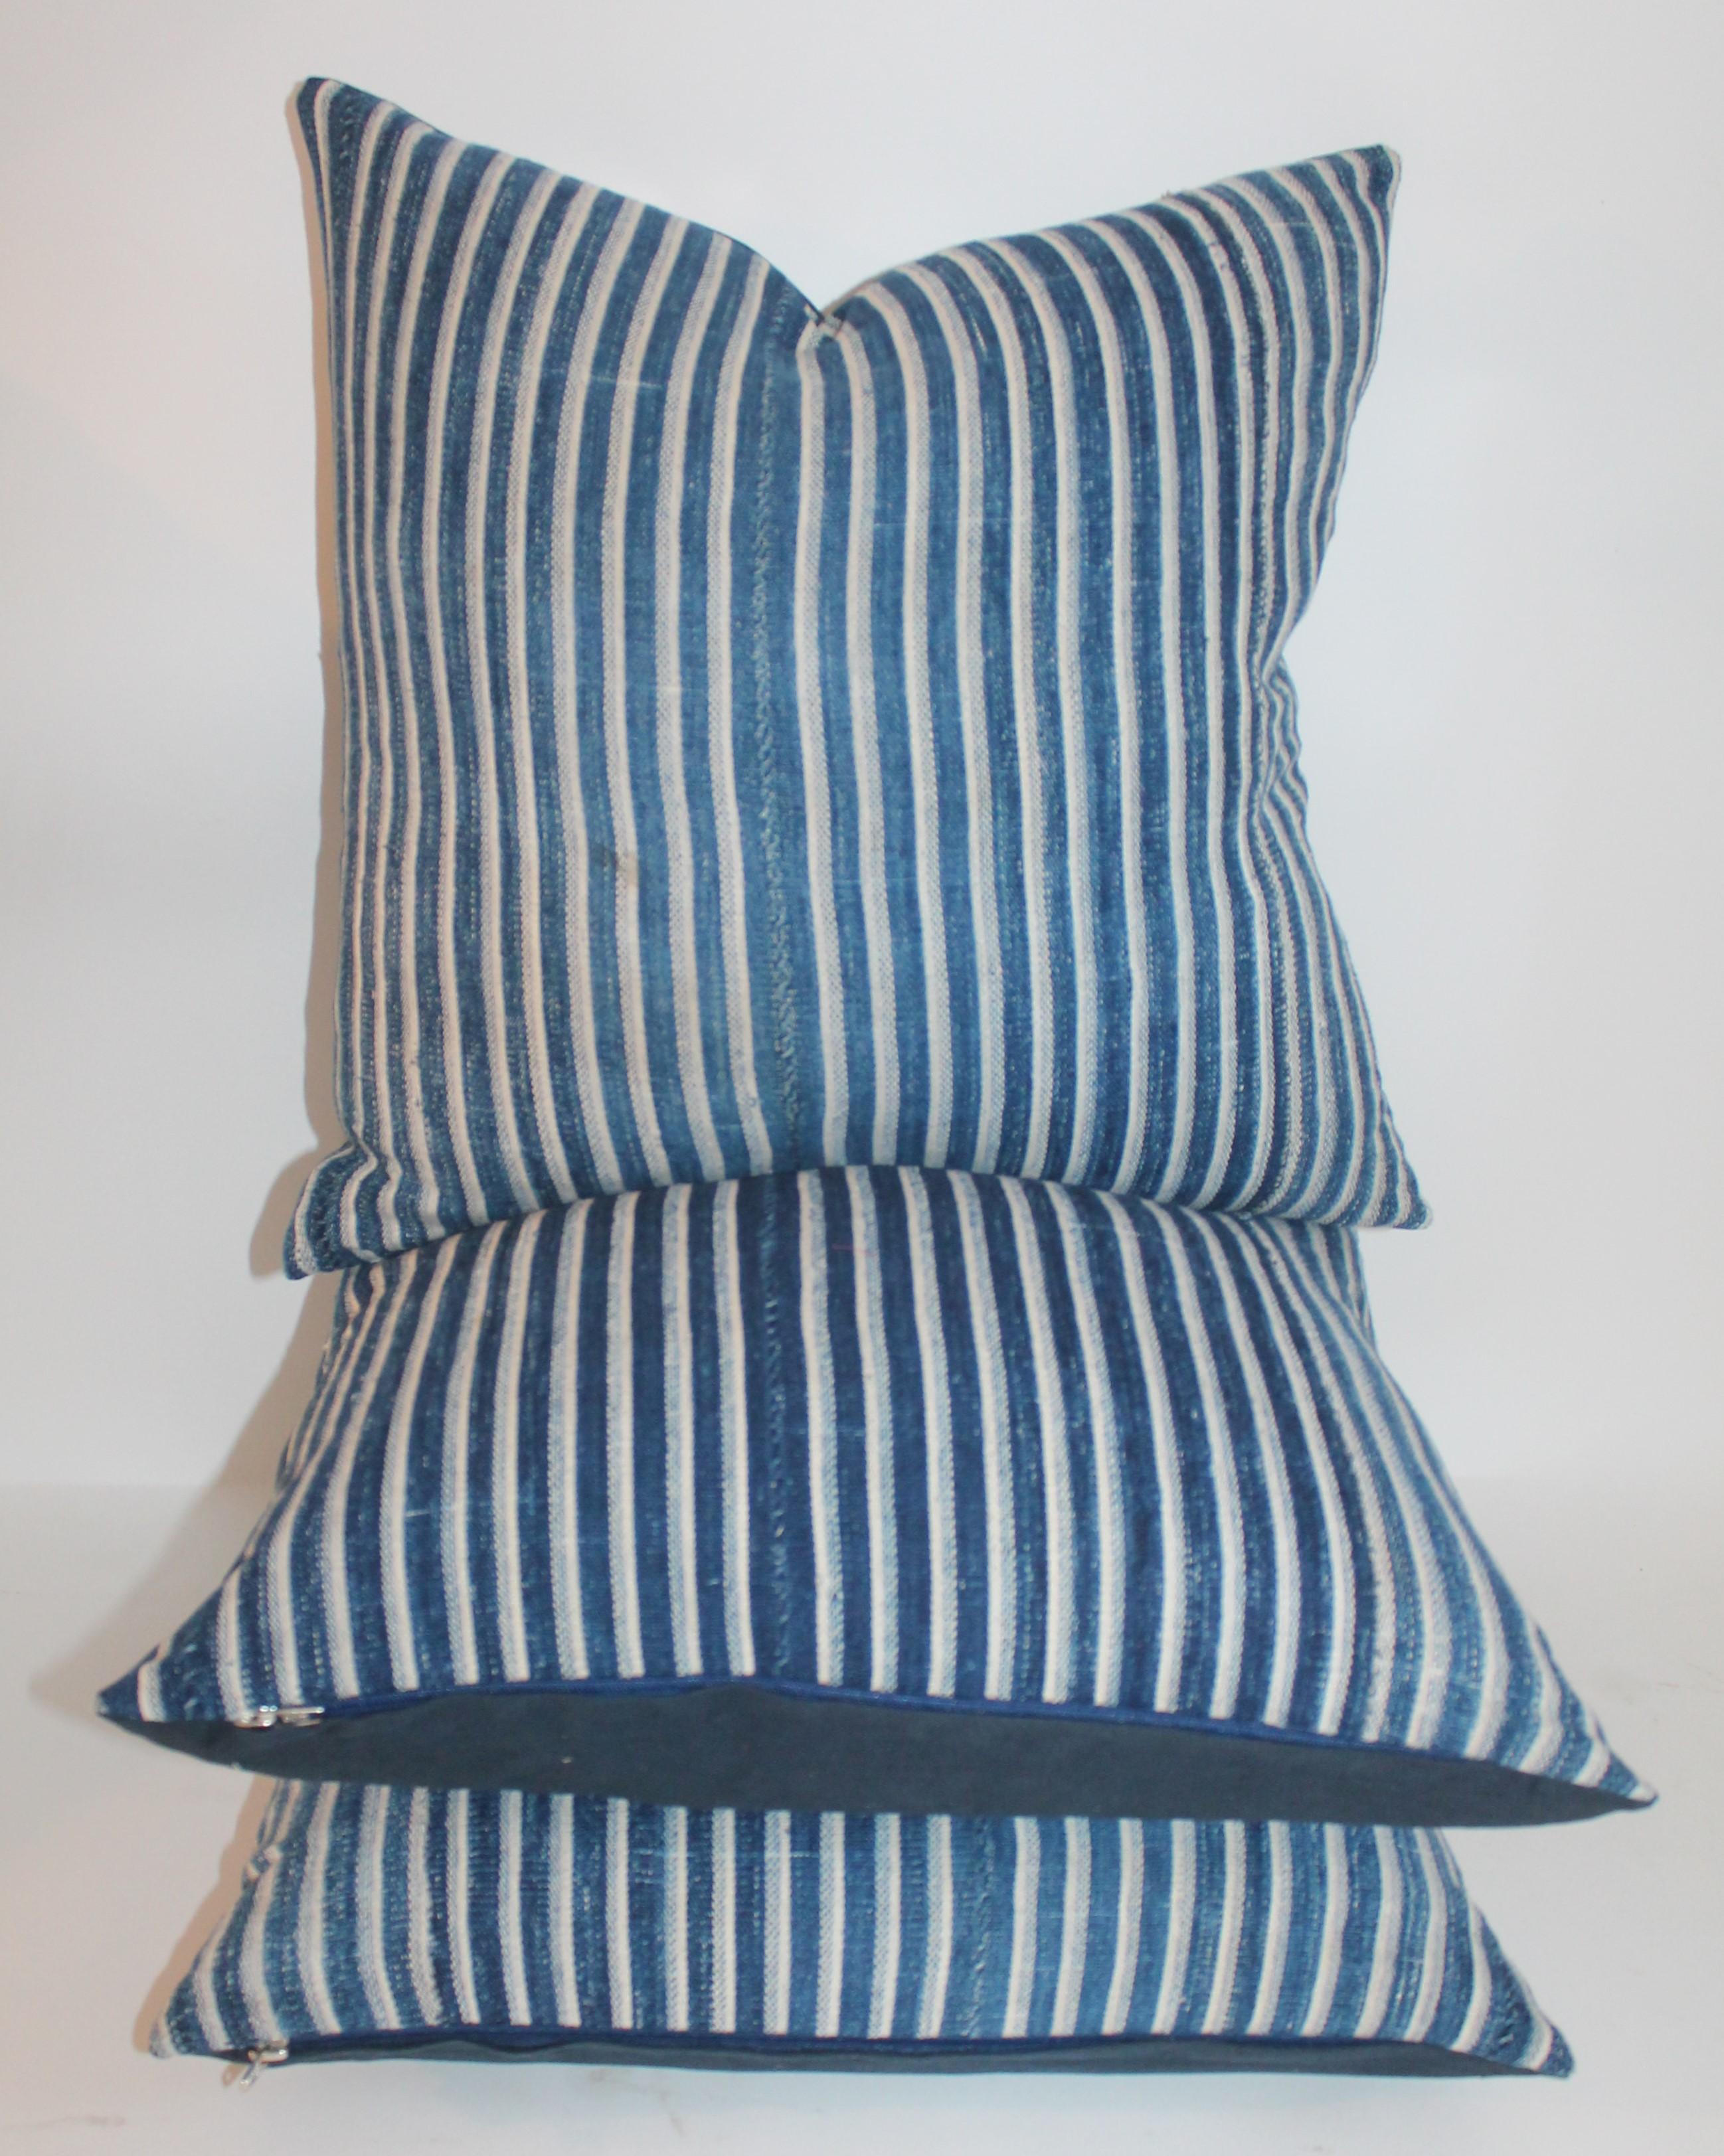 Country Indigo Blue and White Striped Linen Pillows